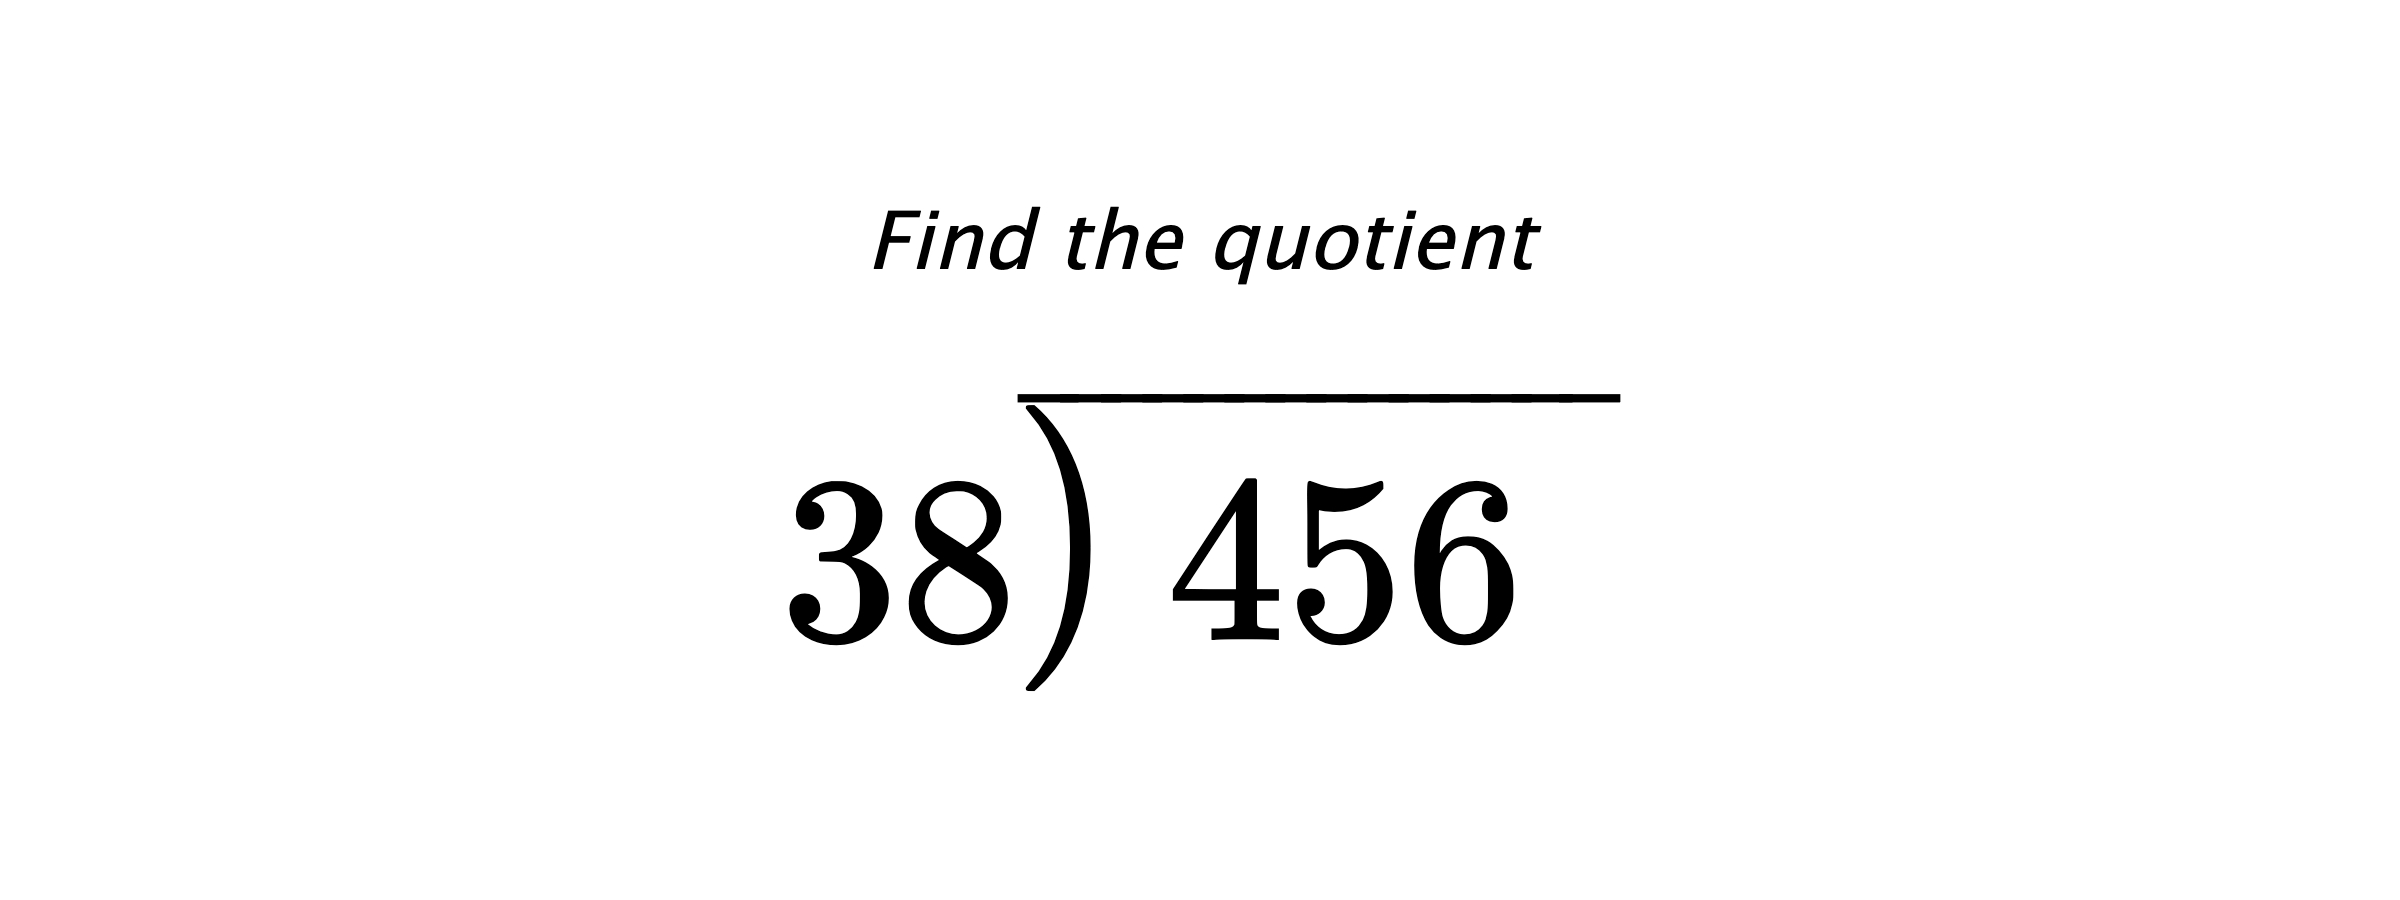 Find the quotient $ 38{\overline{\smash{\raise.3ex\hbox{$\big)$}}\,456\phantom{)}}} $